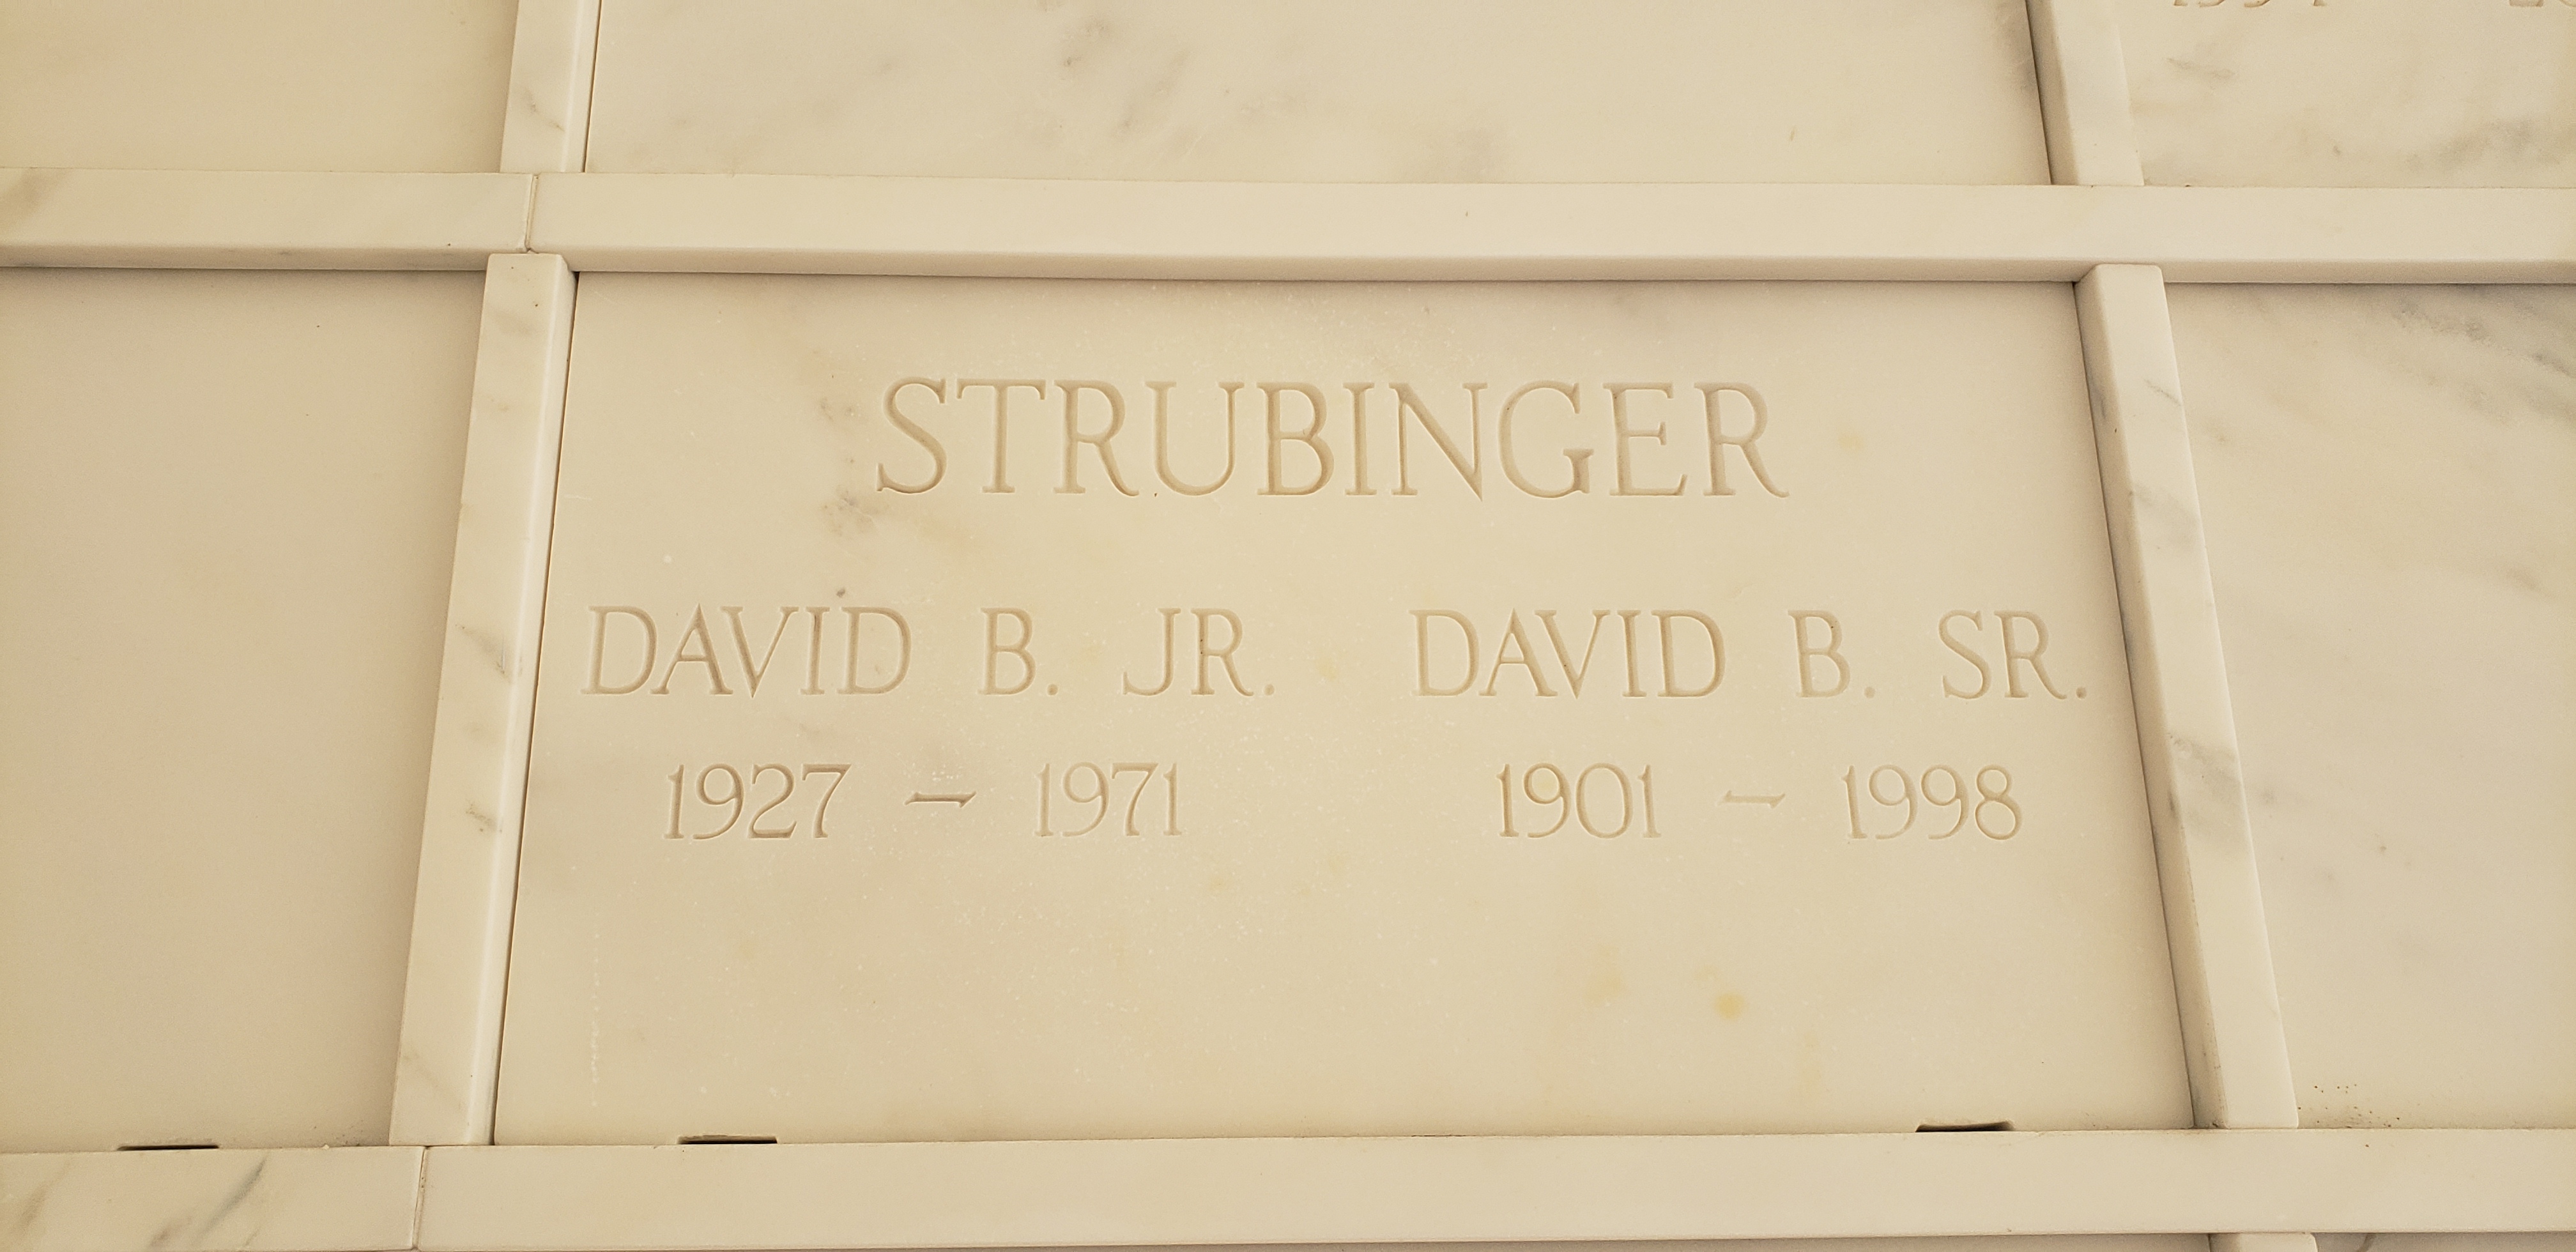 David B Strubinger, Sr